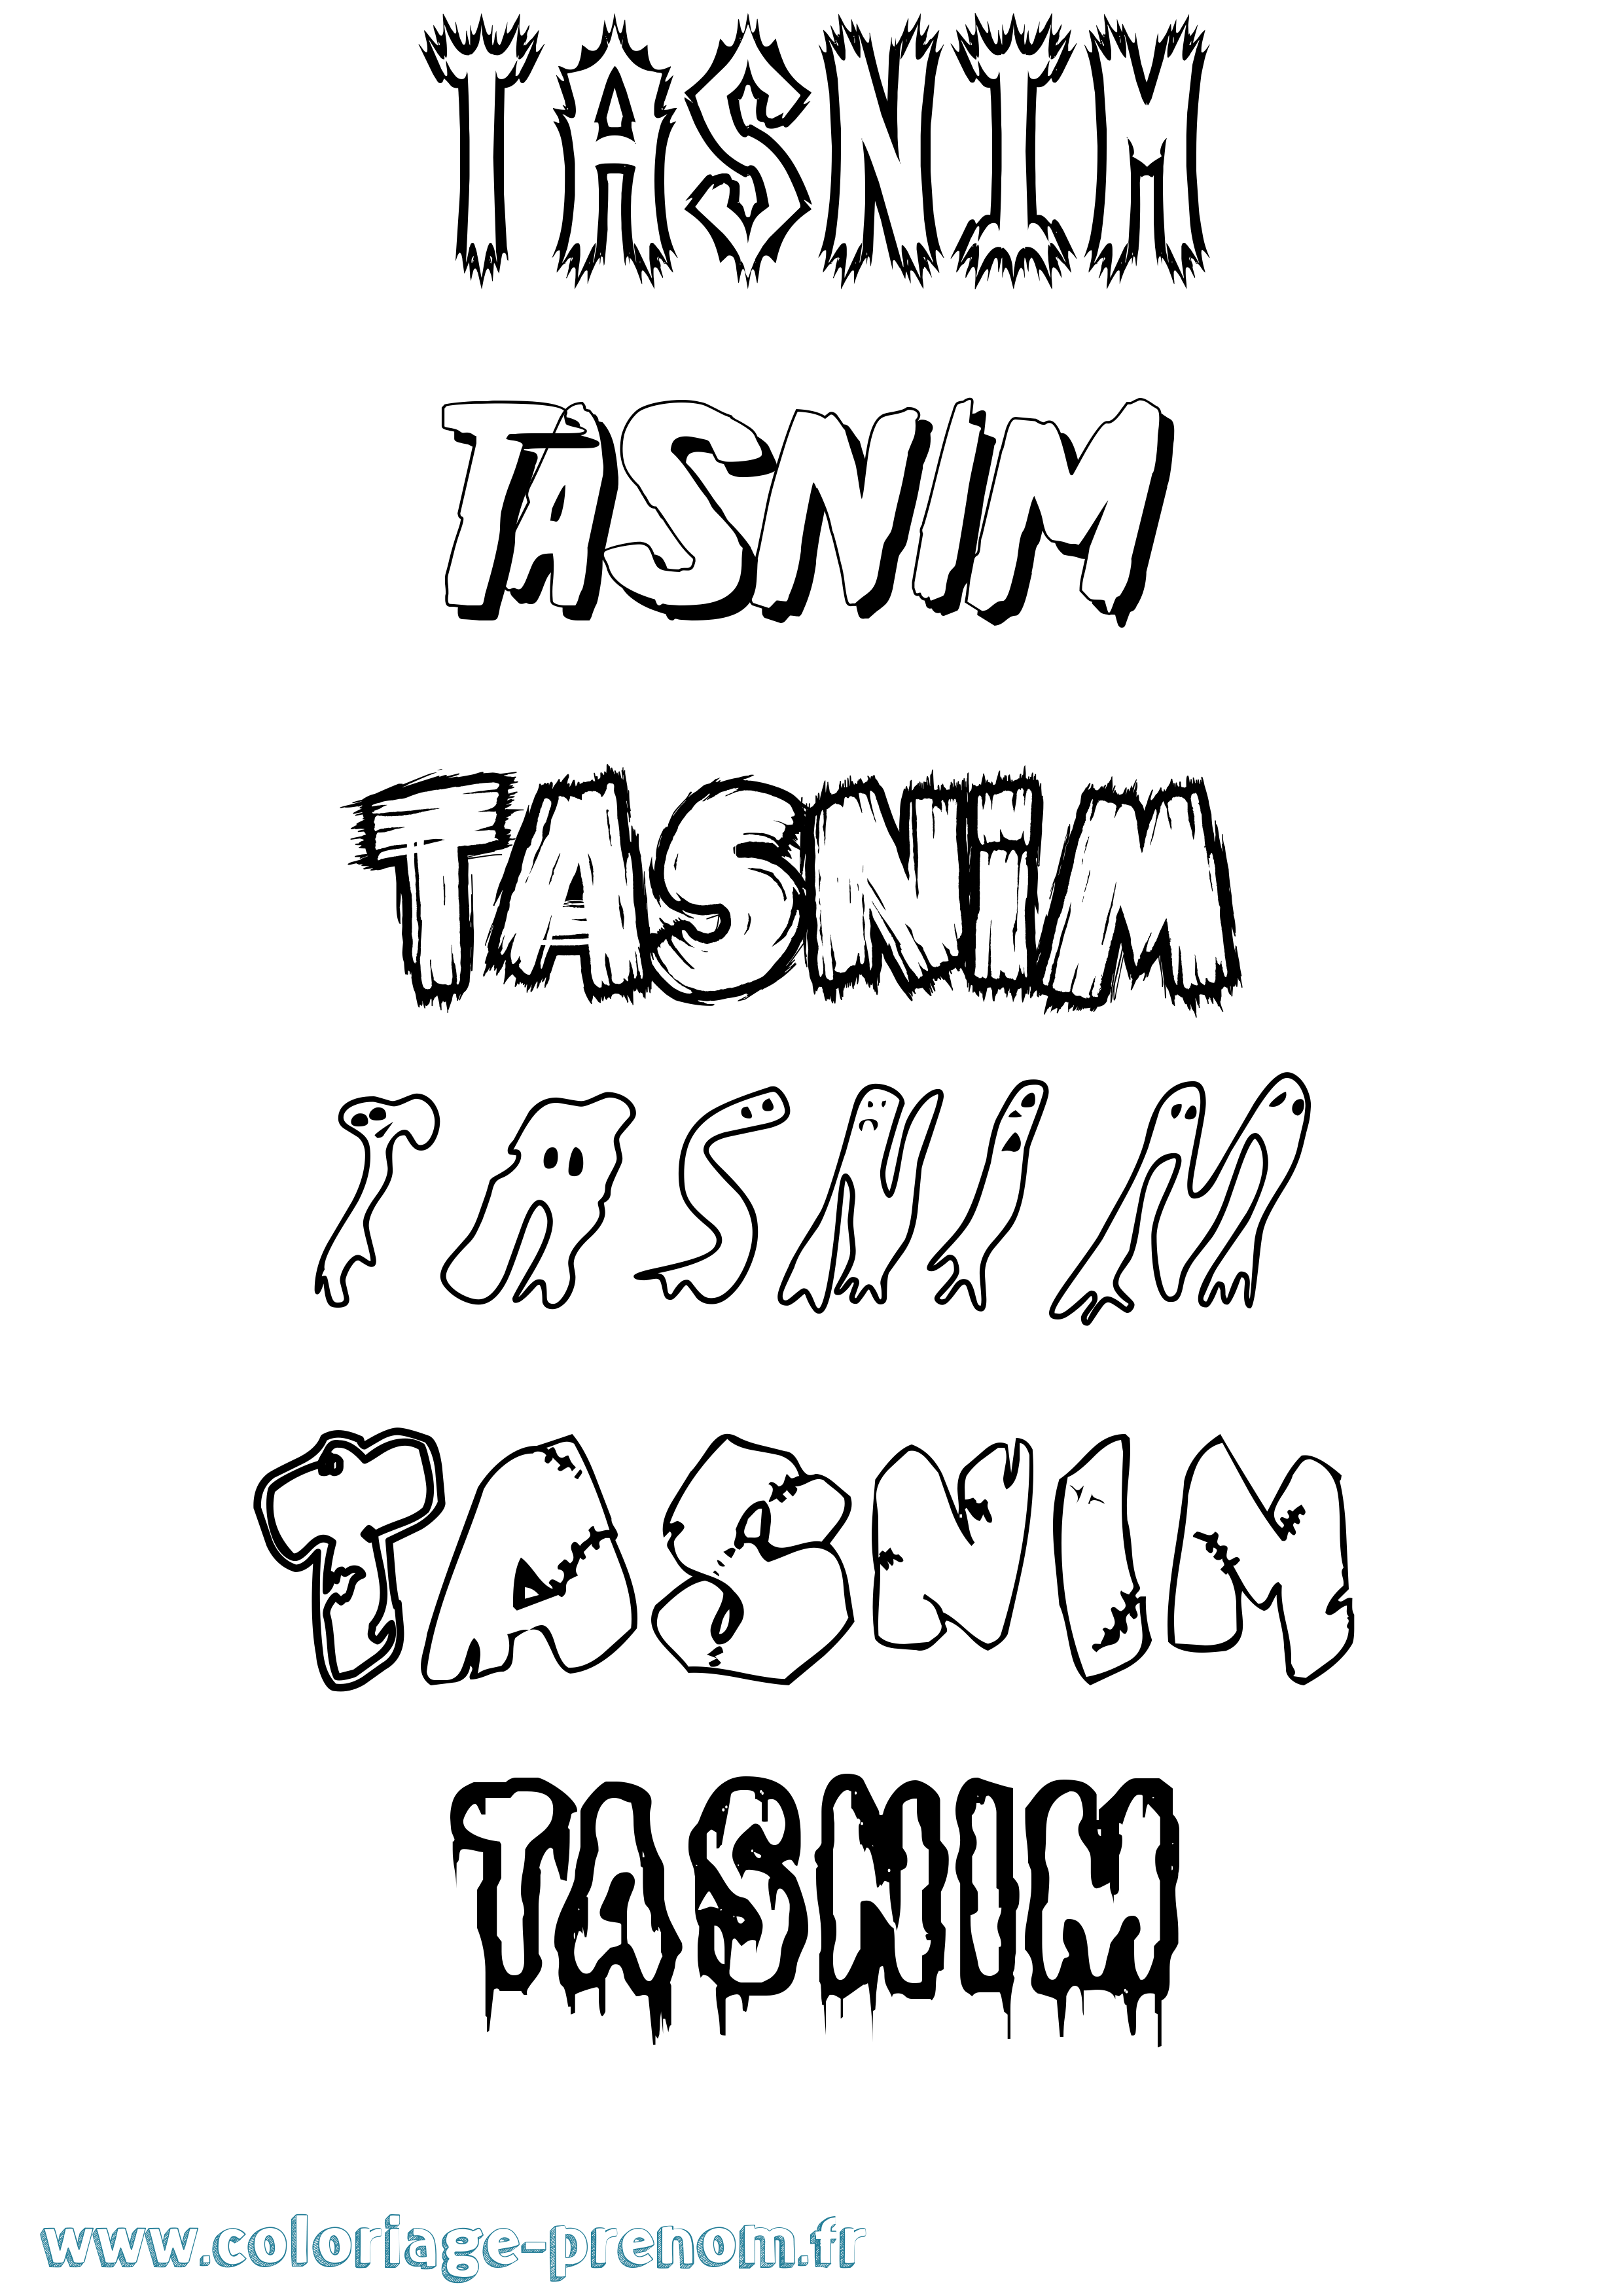 Coloriage prénom Tasnim Frisson